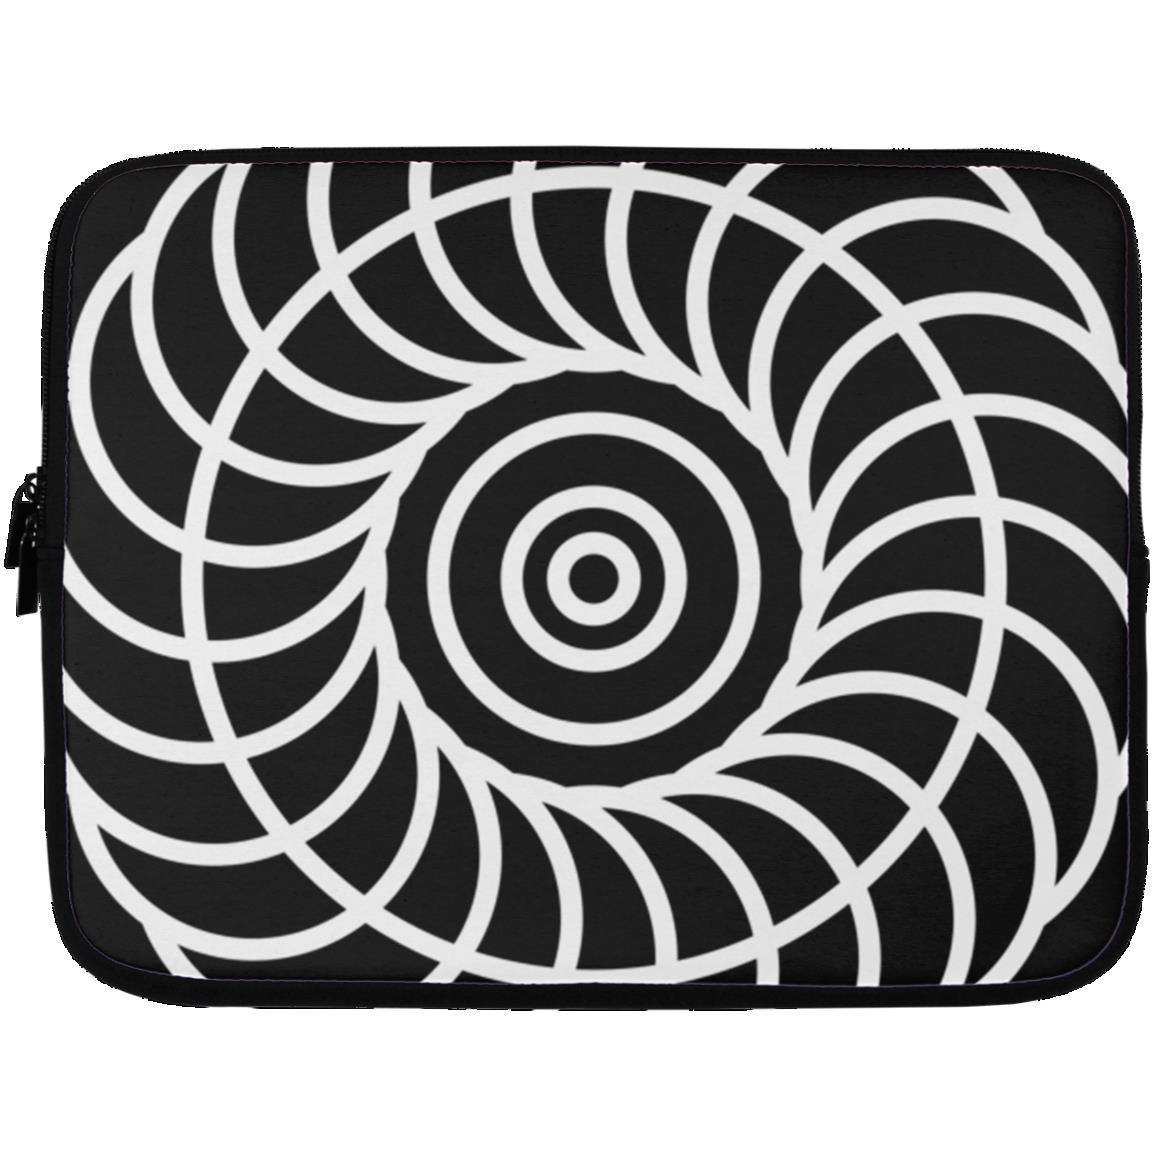 Crop Circle Laptop Sleeve - Rudstone - Shapes of Wisdom